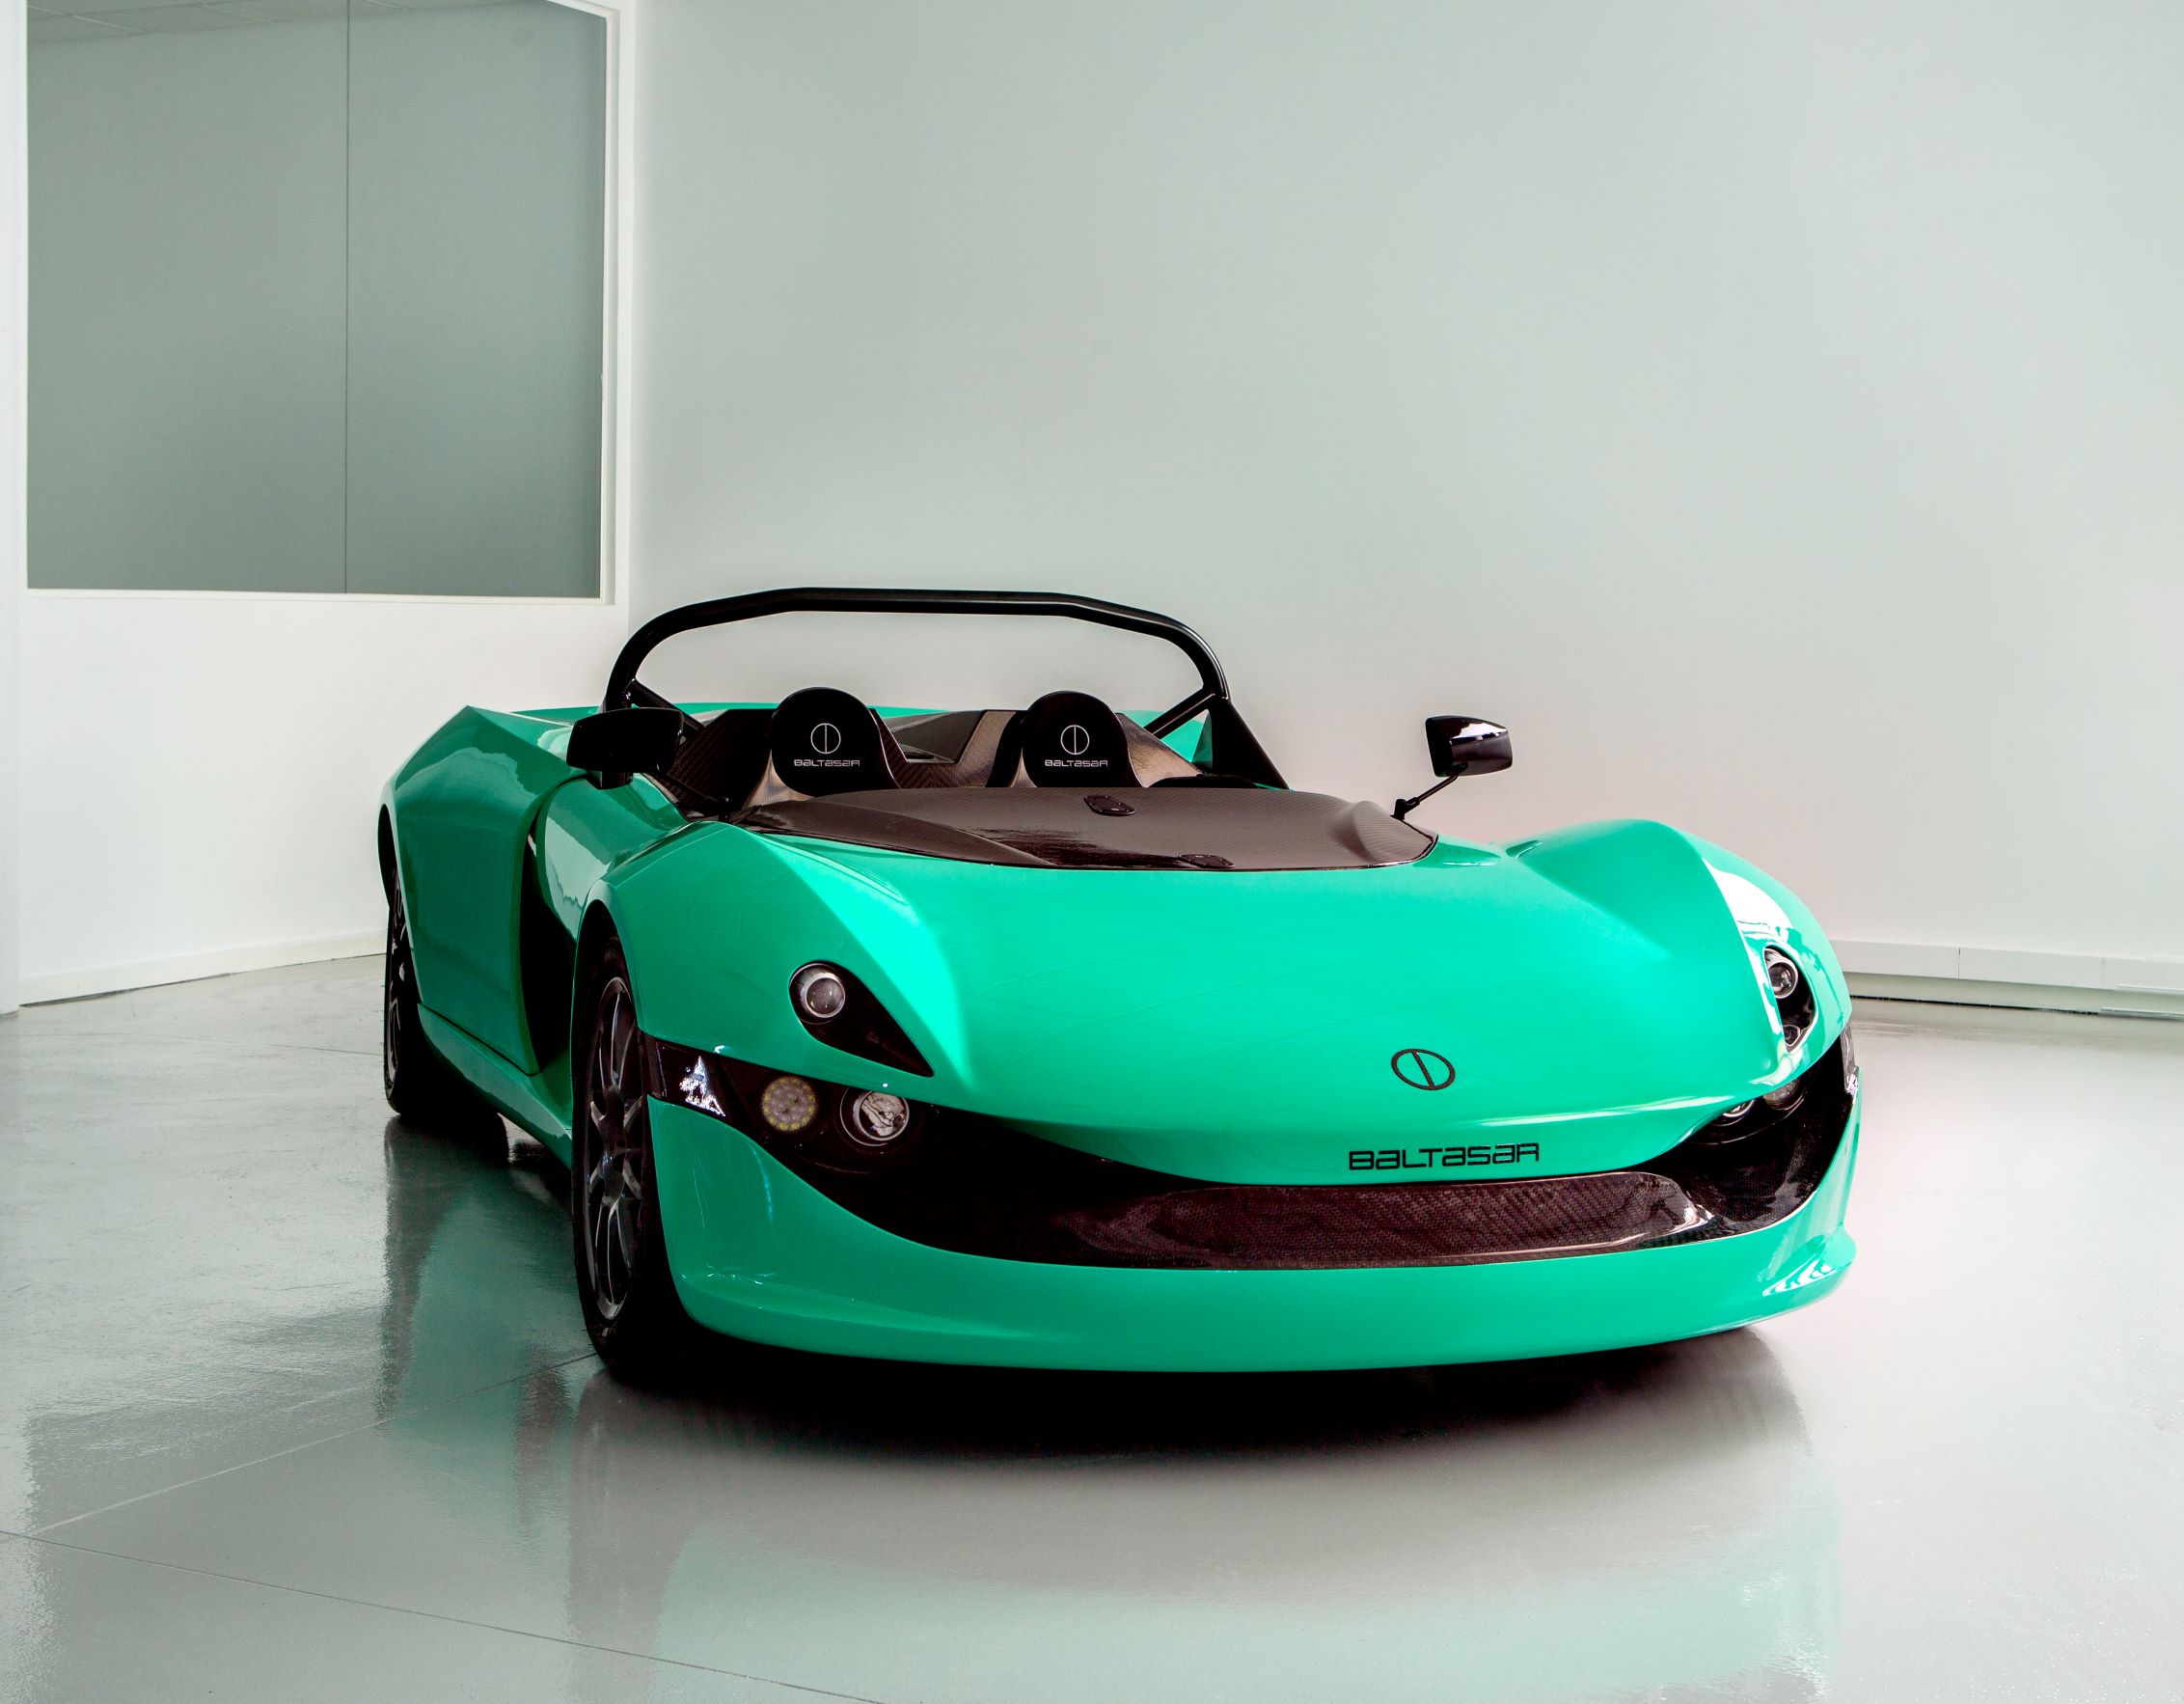 The Baltasar Revolt Is A Lime Green Electric Race Car - Maxim